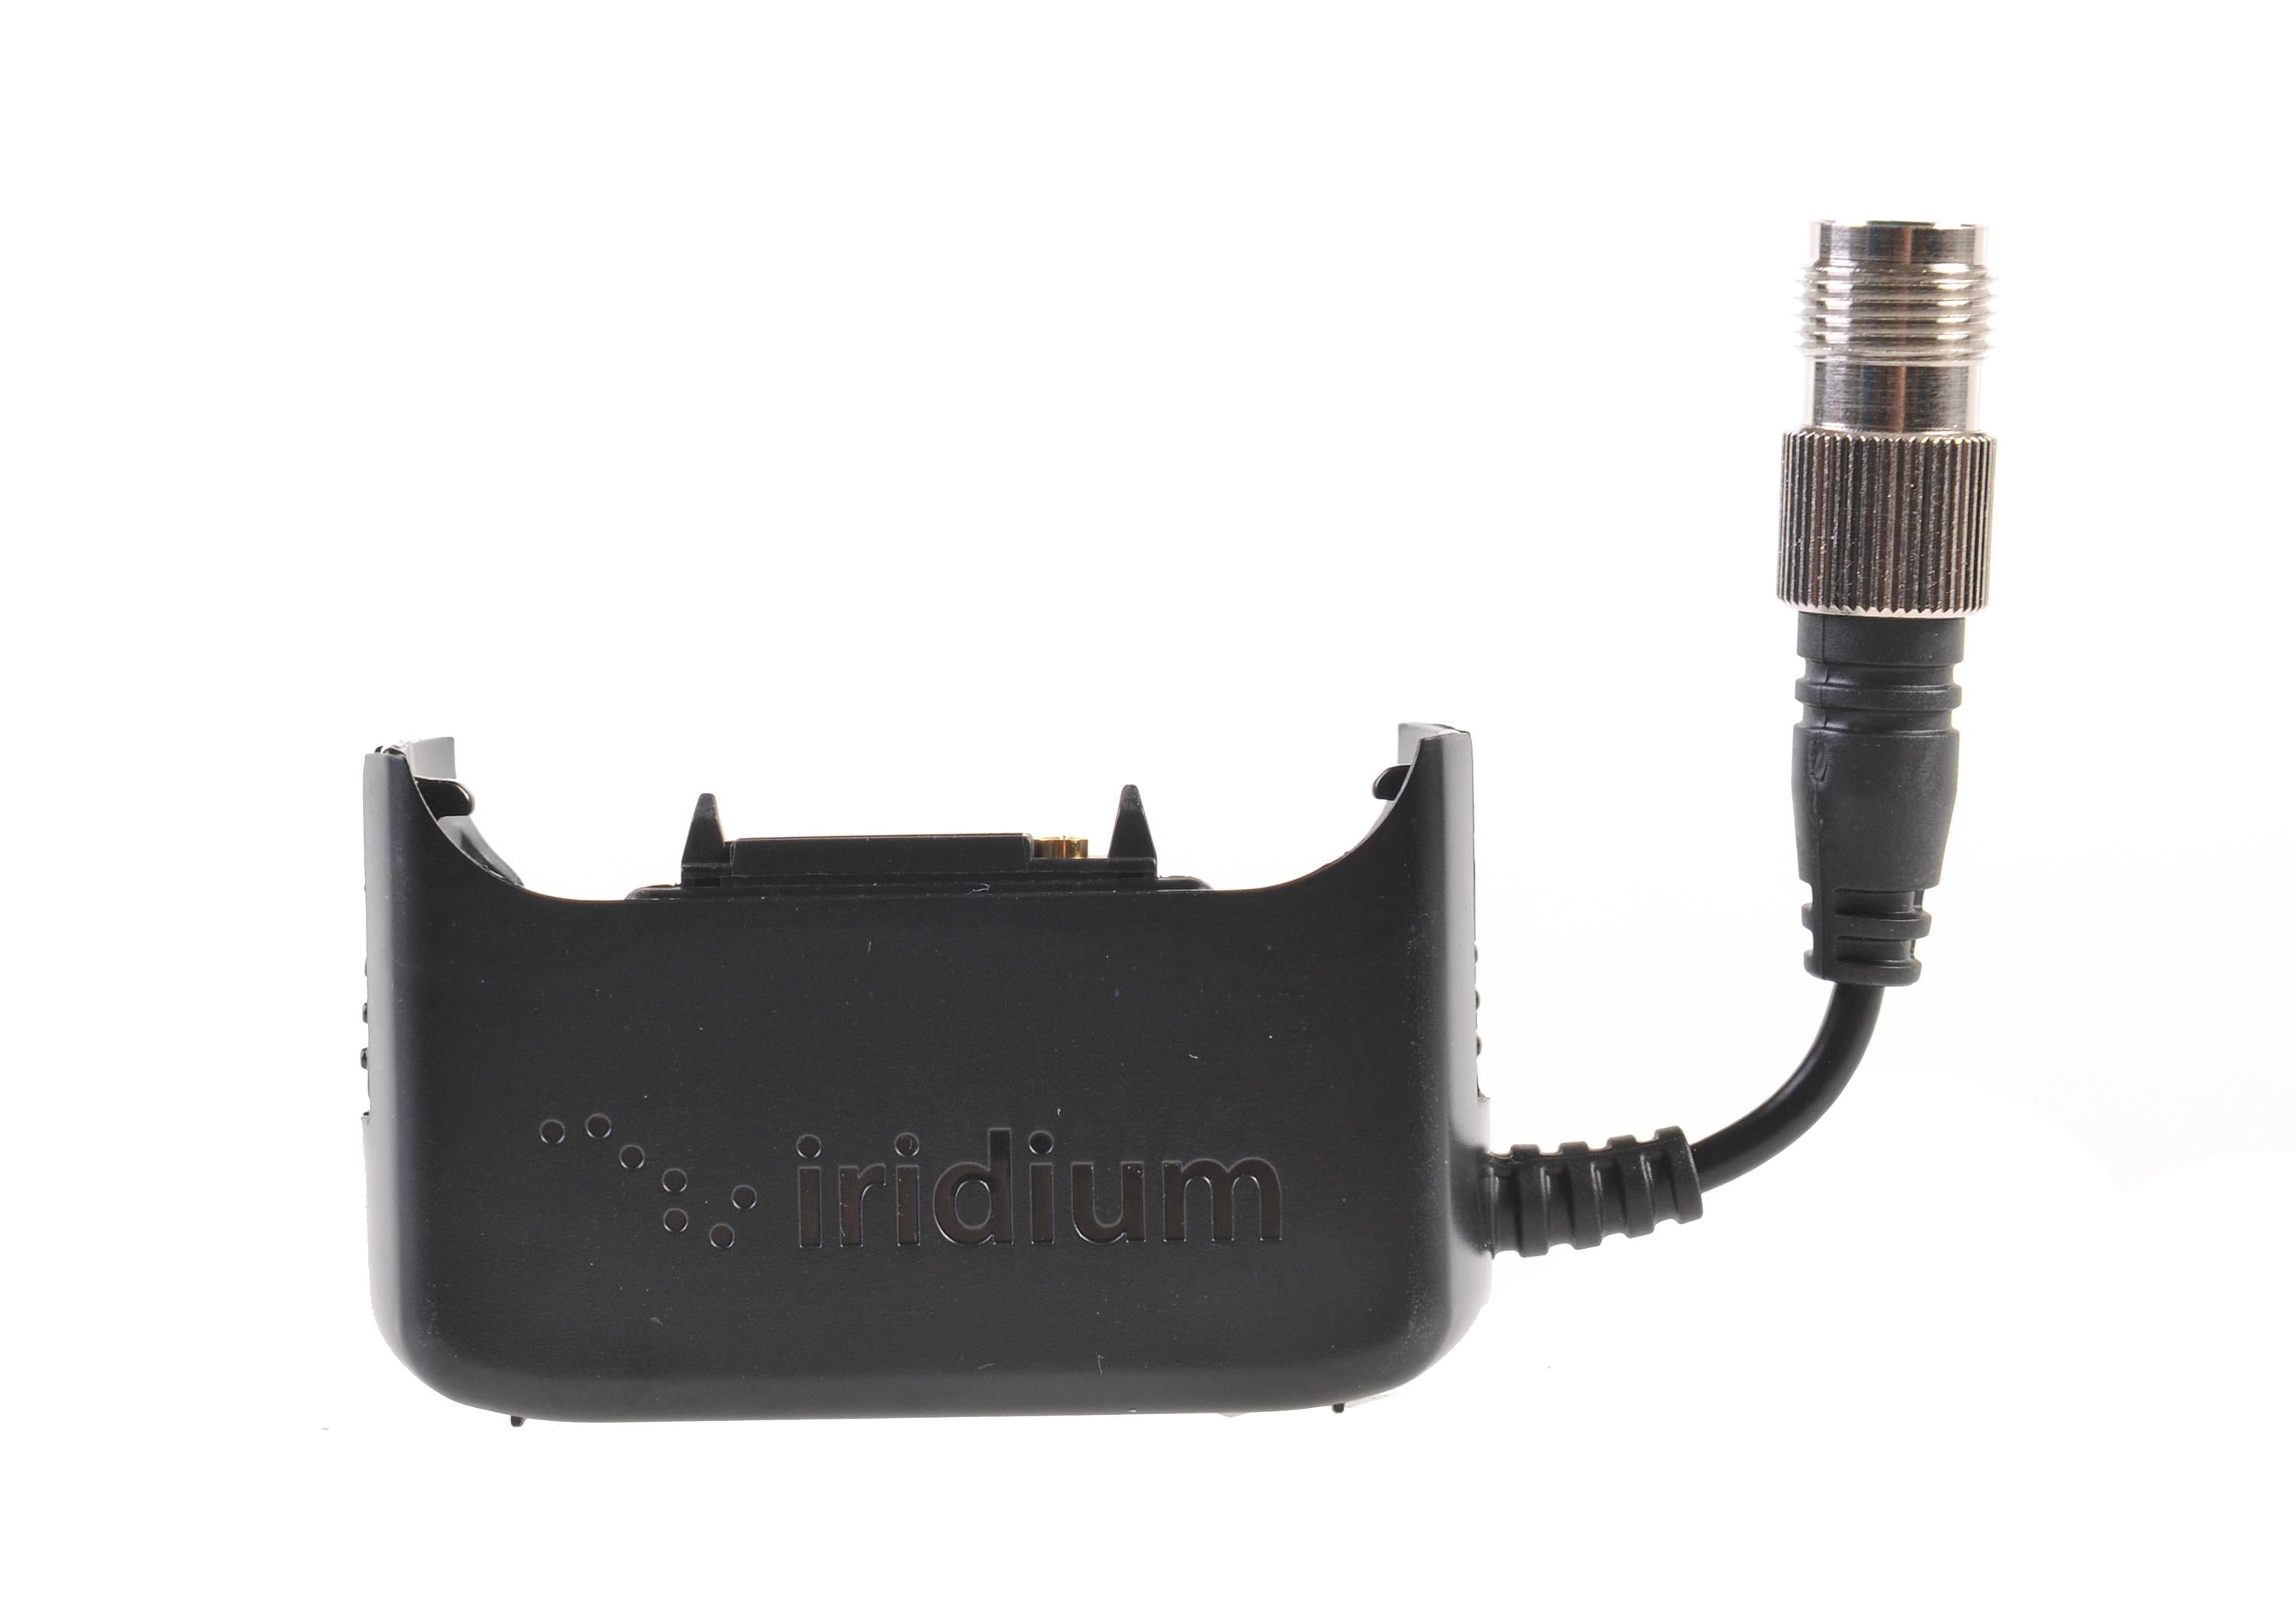 Iridium 9575 Extreme Adapter with Antenna, Power & USB